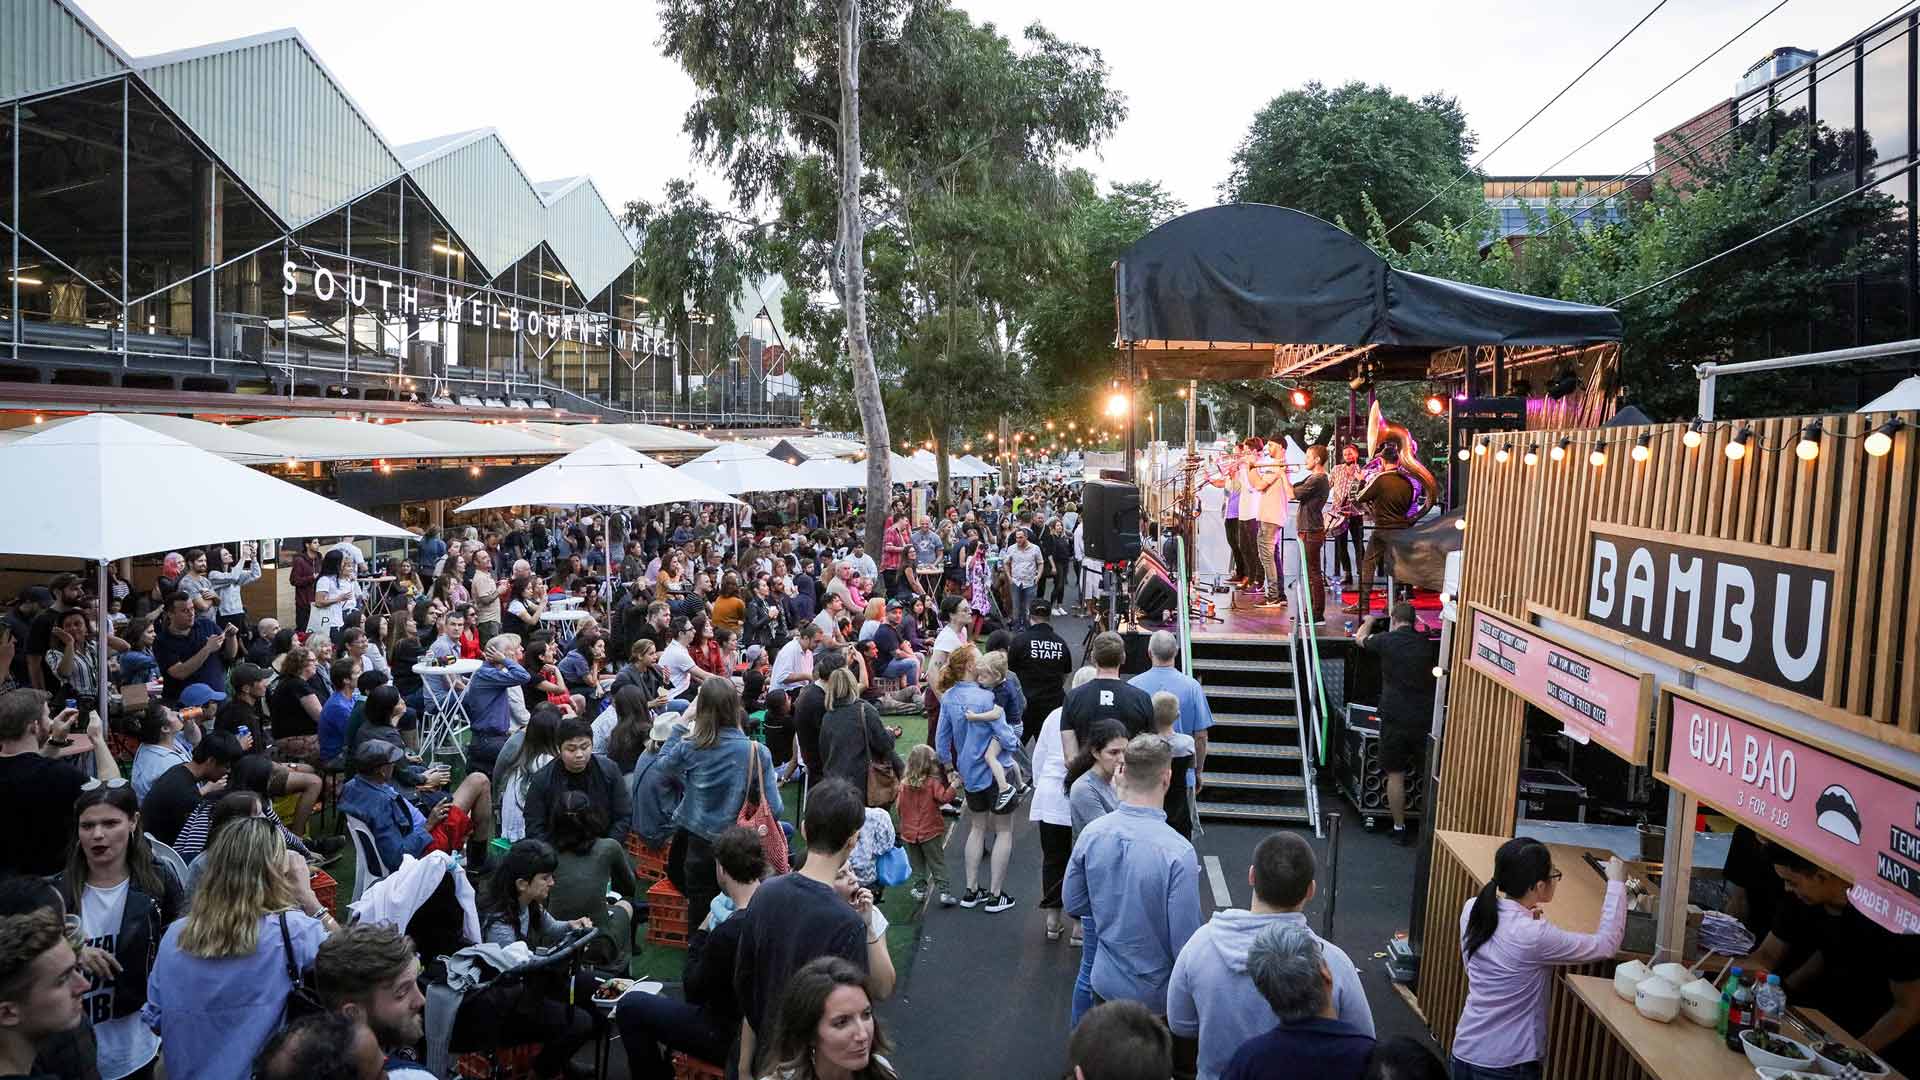 Port Phillip Mussel & Jazz Festival 2020